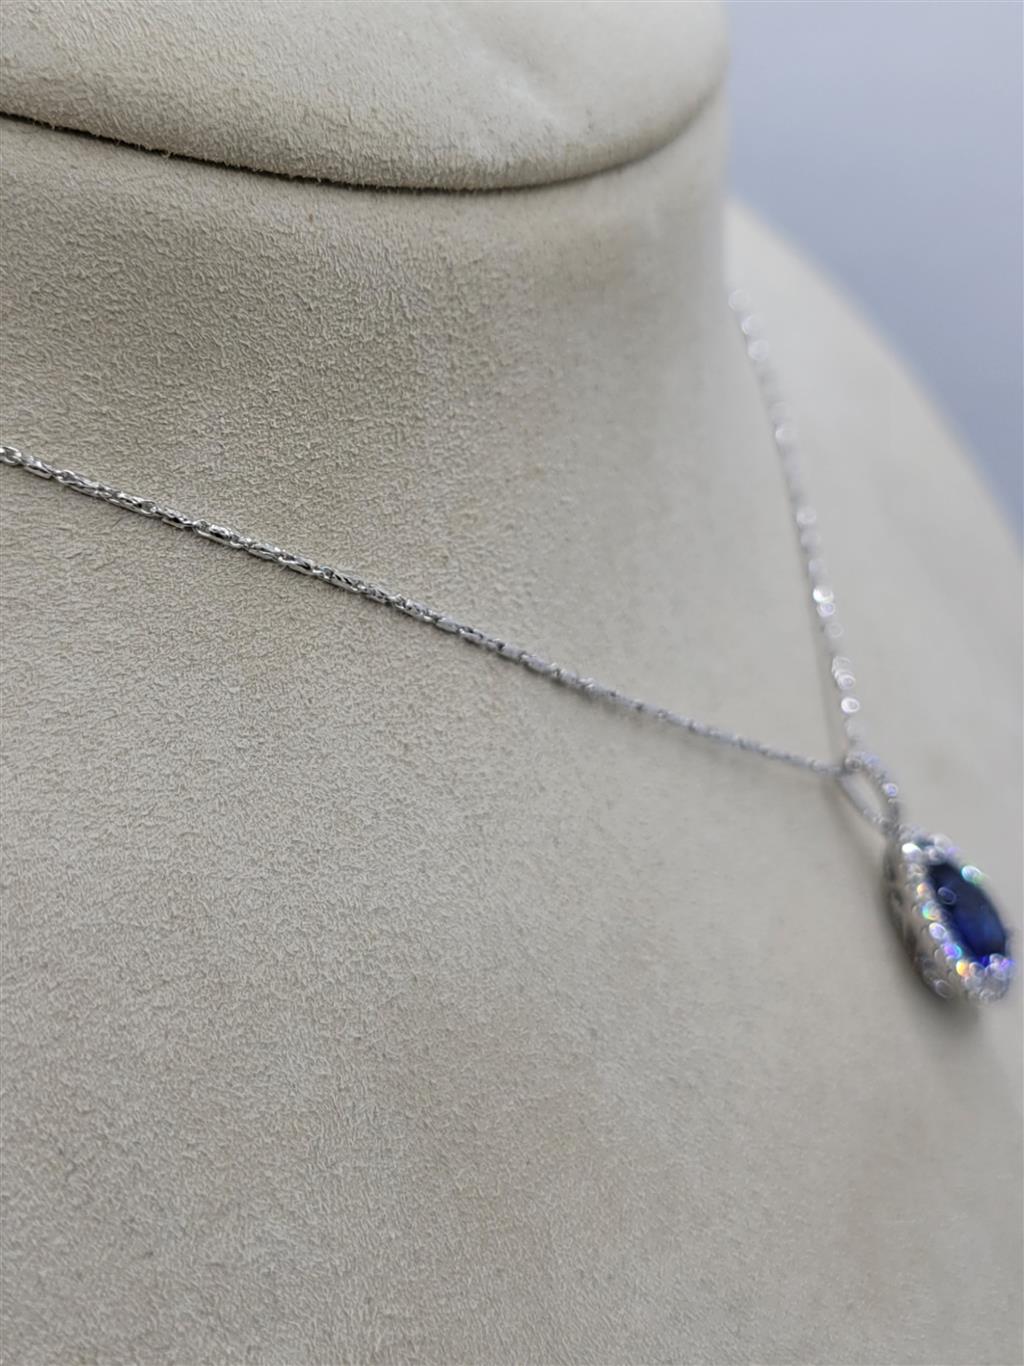 18K White Gold 2.49 ctw Pear Cut Sapphire Gemstone & Diamond Necklace